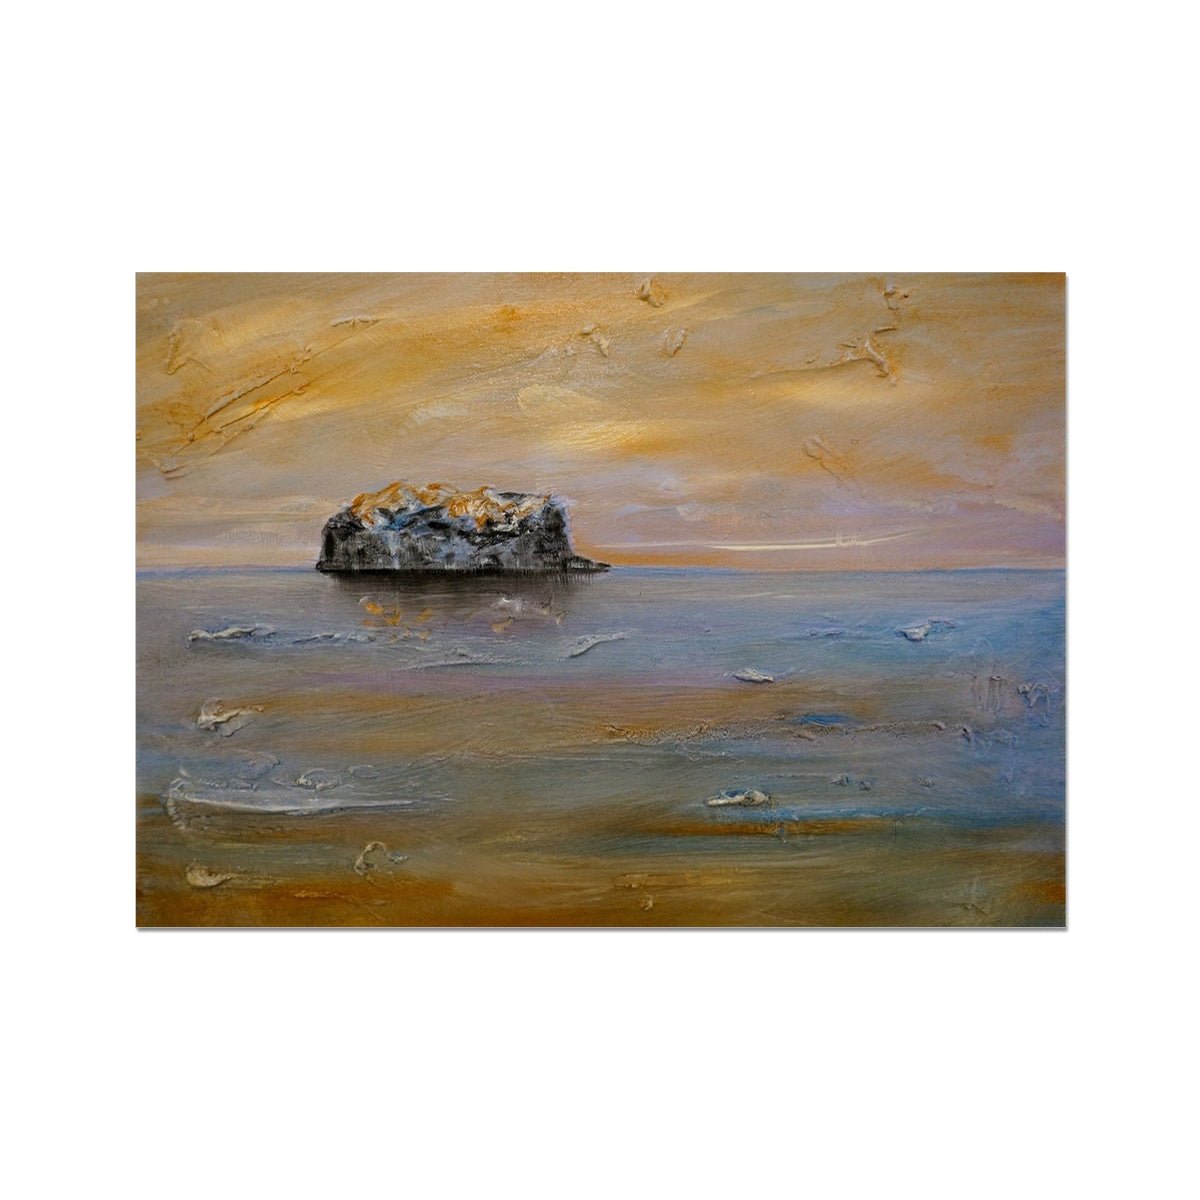 Bass Rock Dawn Painting | Fine Art Prints From Scotland-Unframed Prints-Edinburgh & Glasgow Art Gallery-A2 Landscape-Paintings, Prints, Homeware, Art Gifts From Scotland By Scottish Artist Kevin Hunter